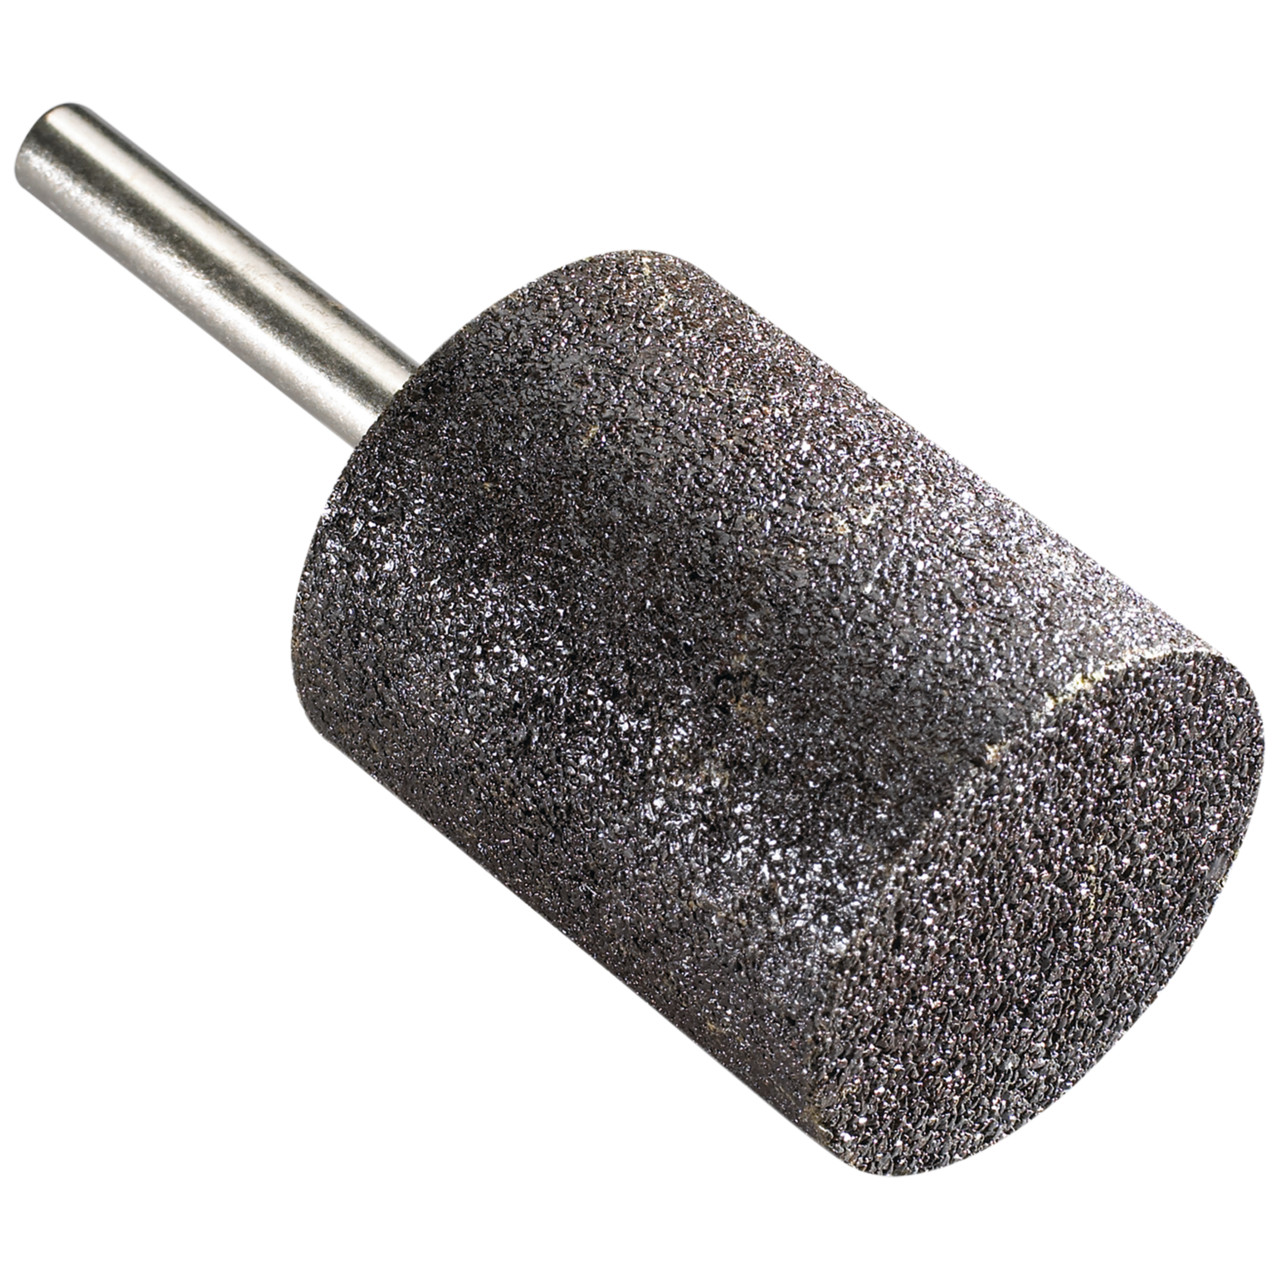 Tyrolit Punti montati in resina DxT-SxL 40x20-6x40 Per ghisa, forma: 52ZY - cilindro (punto montato), Art. 2258